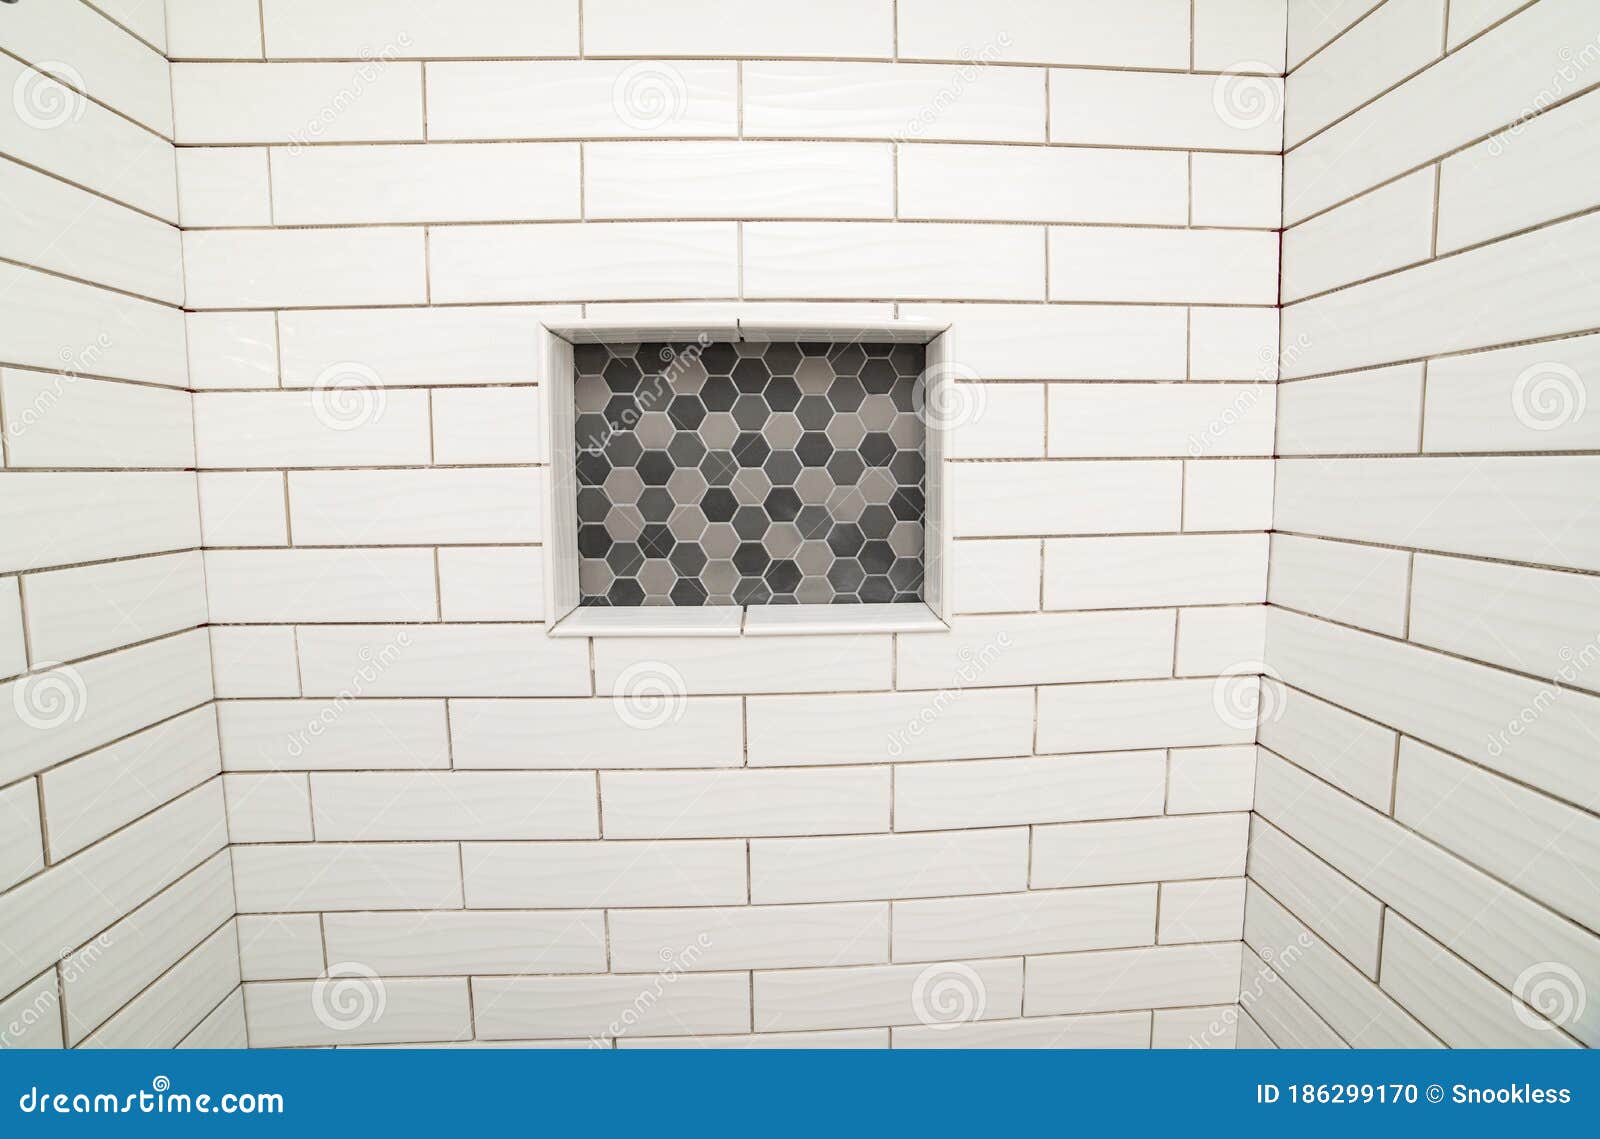 New Tile For Bathroom Shower Walls Stock Photo Image Of Progress Rectangle 186299170,Dog Seizures Treatment Honey